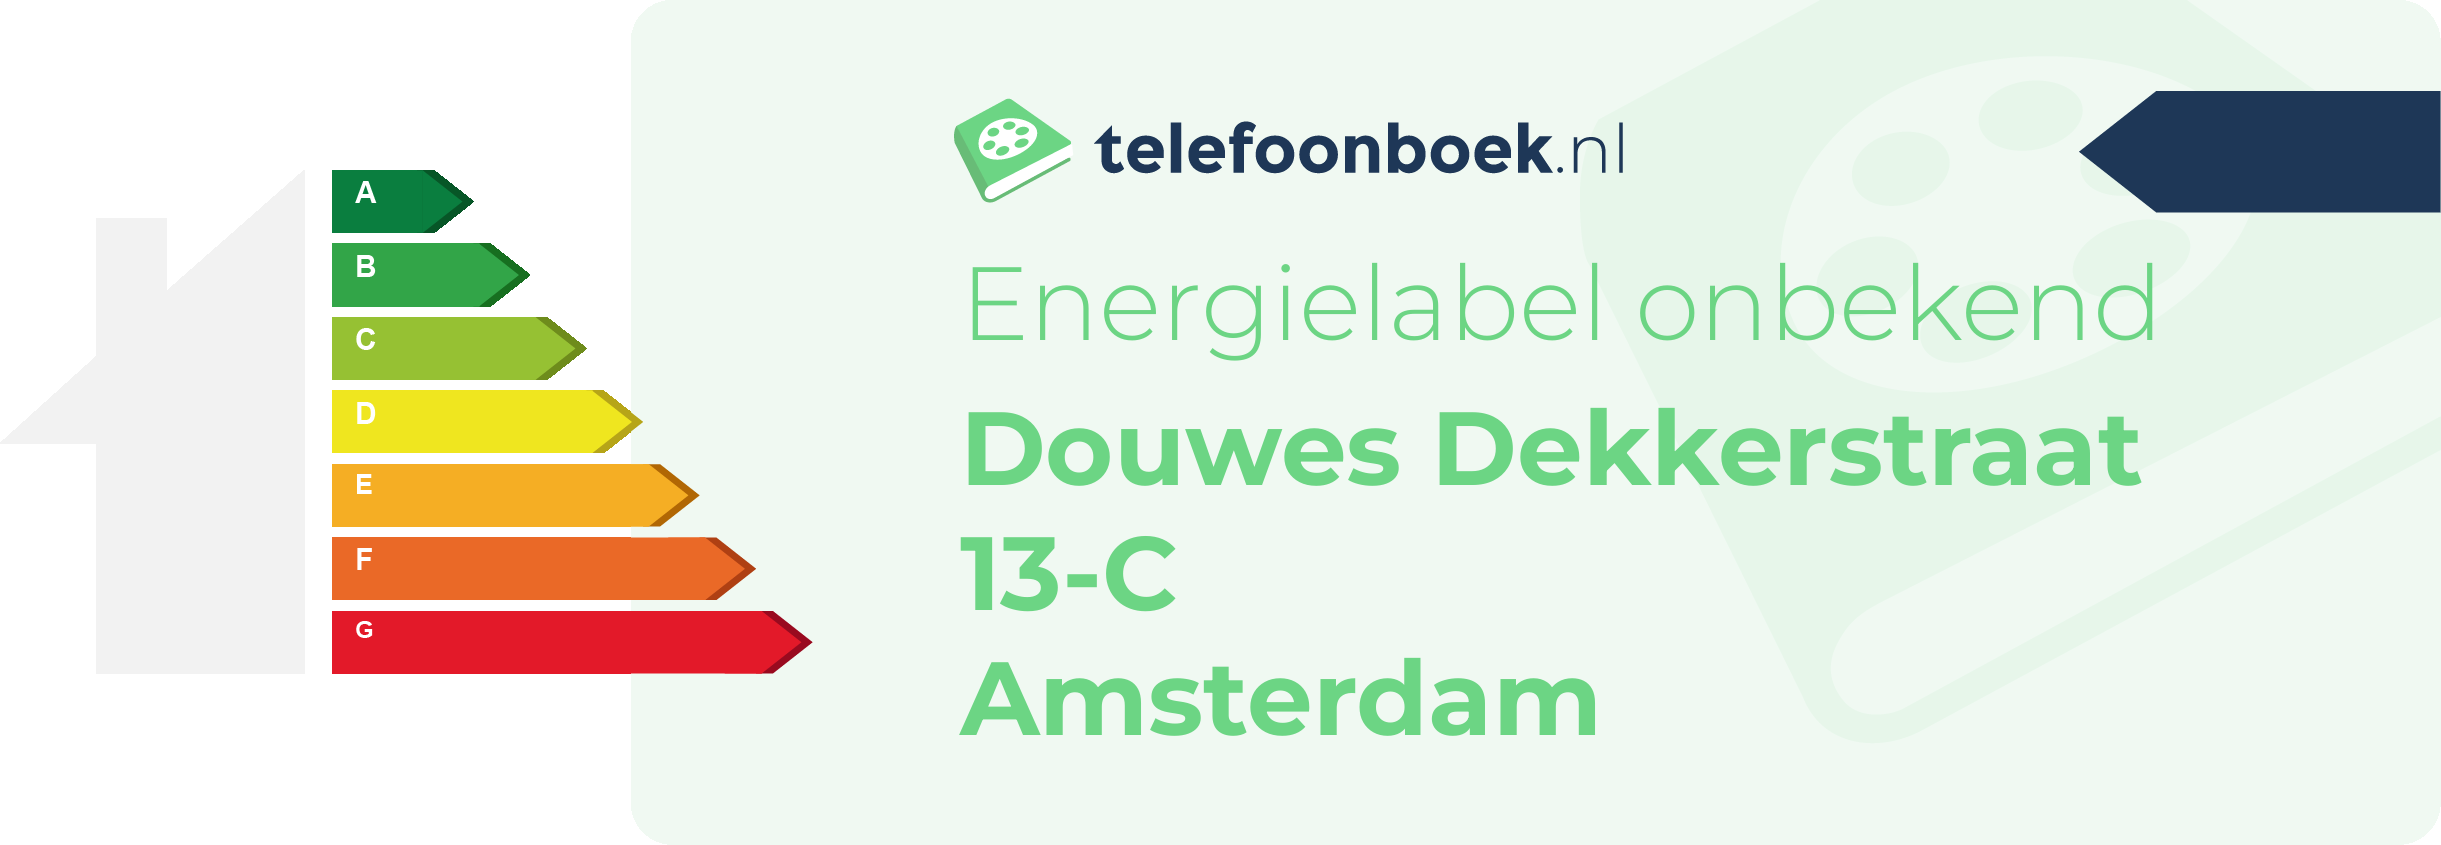 Energielabel Douwes Dekkerstraat 13-C Amsterdam